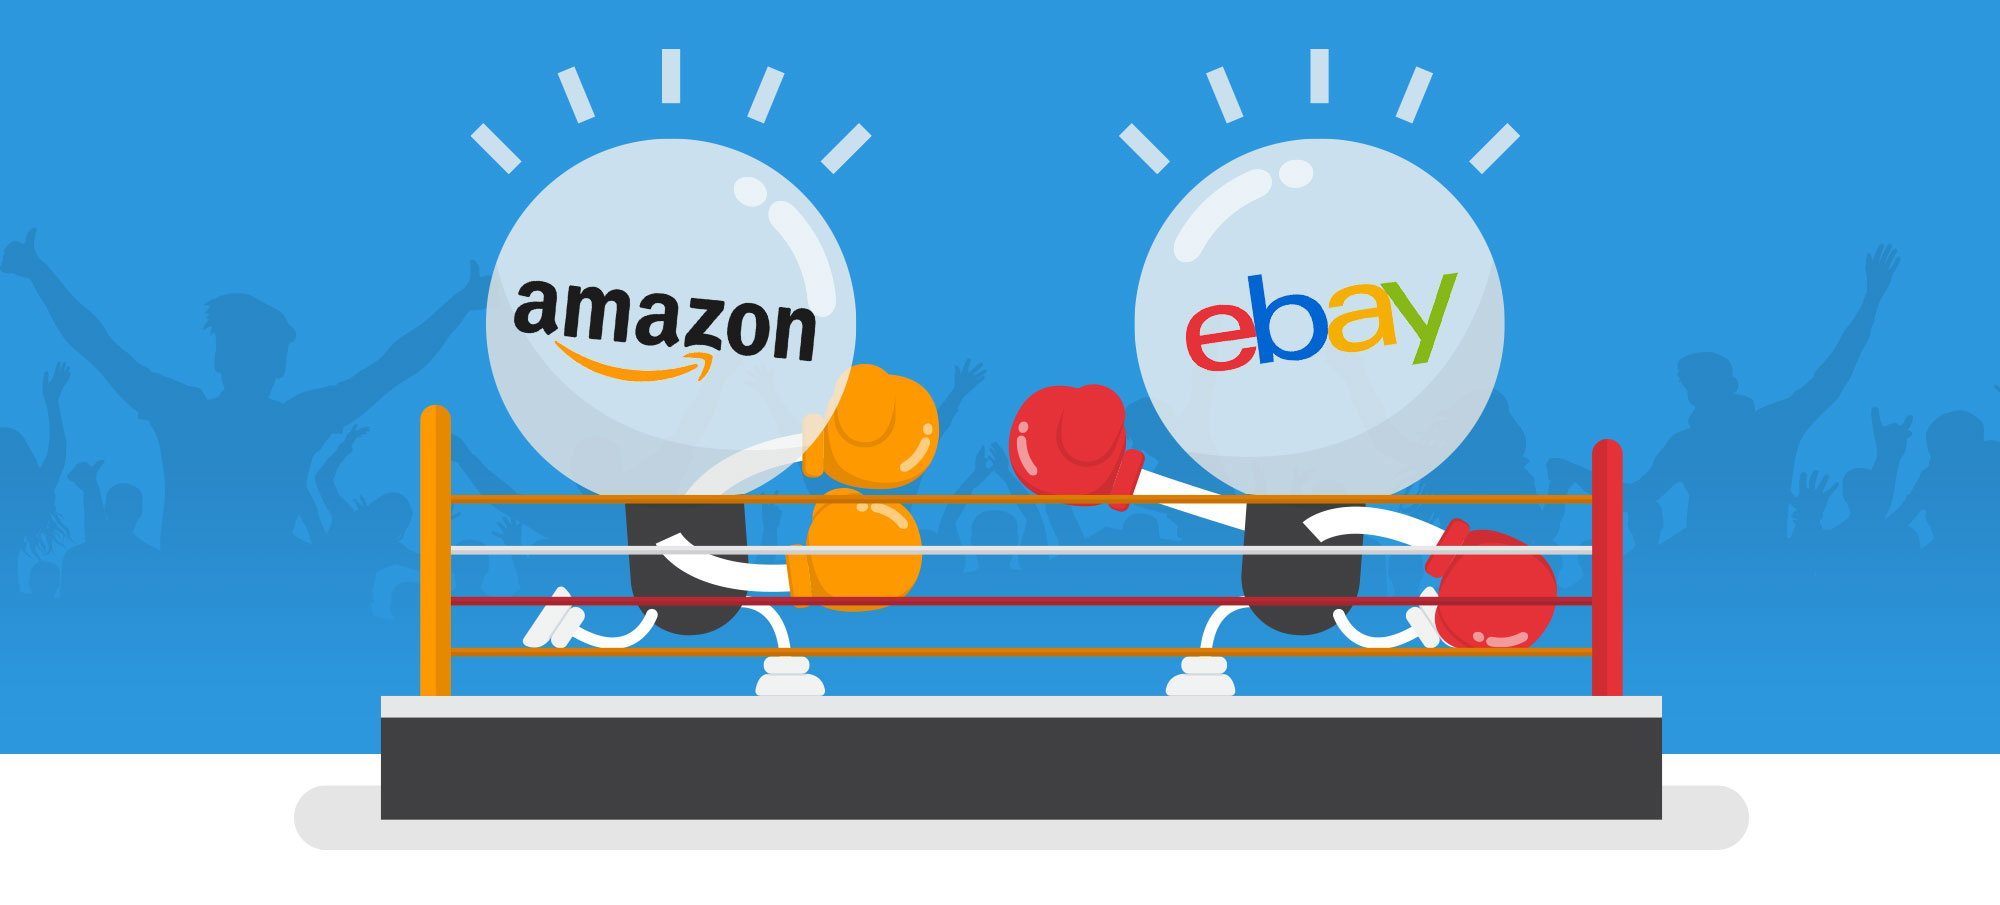 Amazon ebay